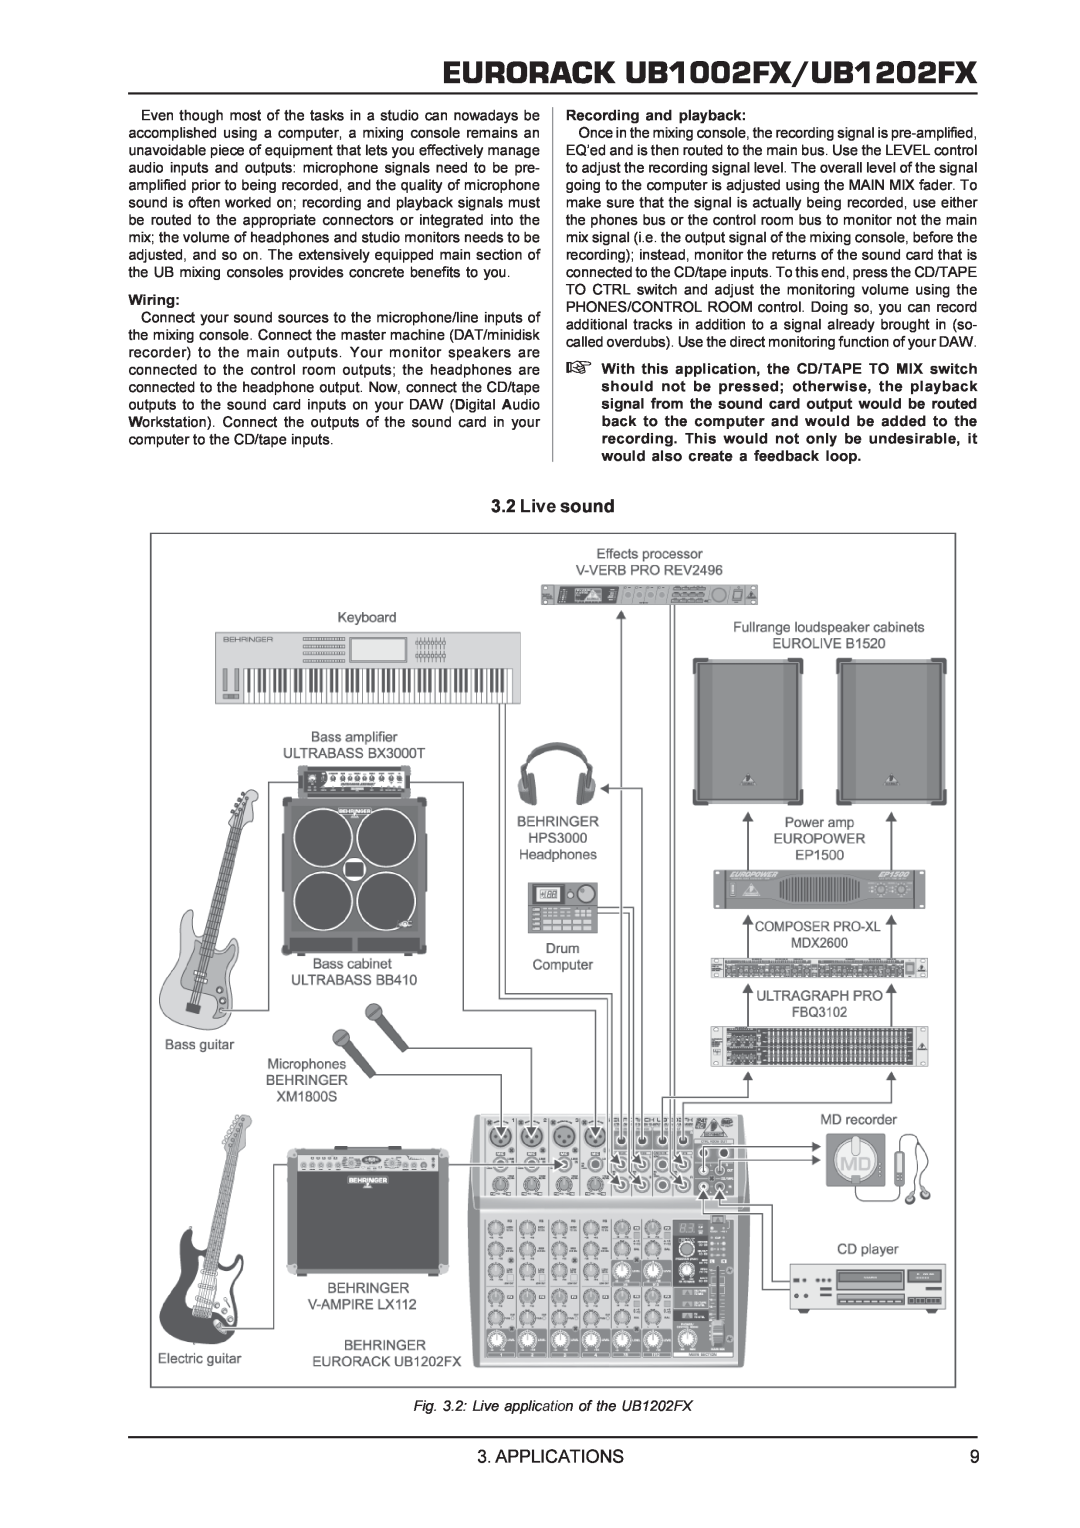 Behringer manual Live sound, 2 Live application of the UB1202FX, EURORACK UB1002FX/UB1202FX, Applications, Wiring 